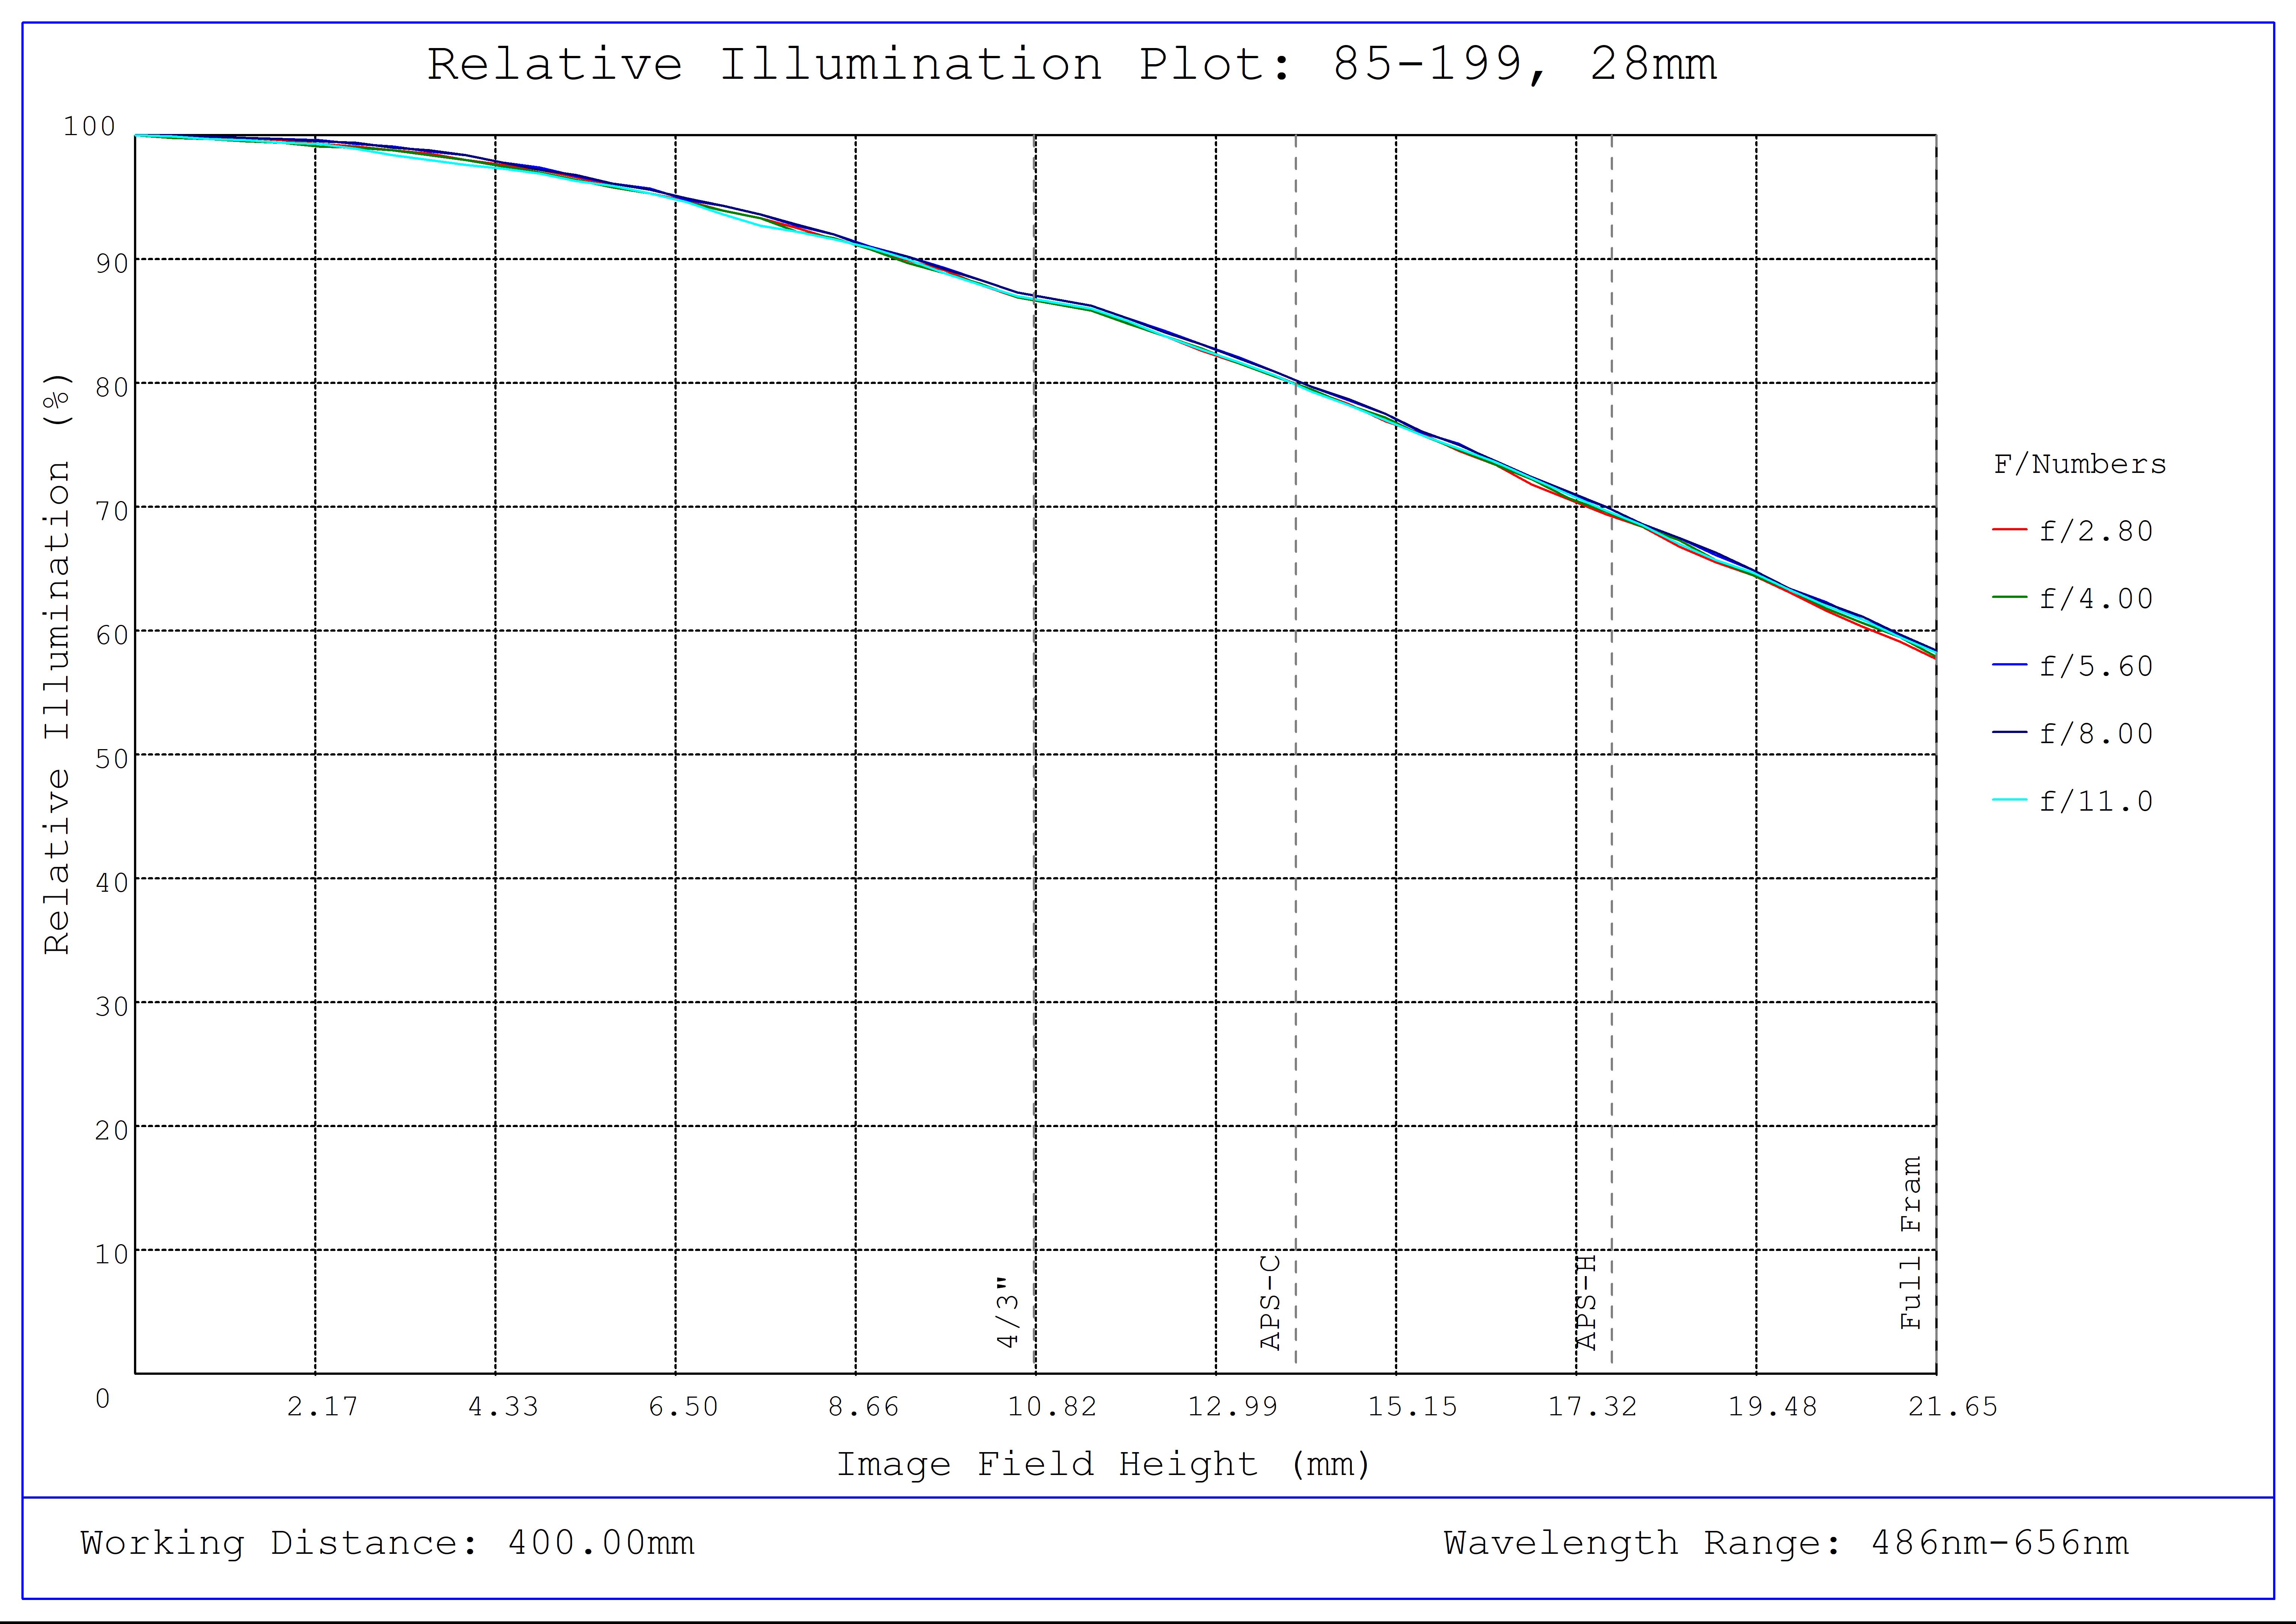 #85-199, 28mm Short Working Distance, LF Series Fixed Focal Length Lens, Relative Illumination Plot